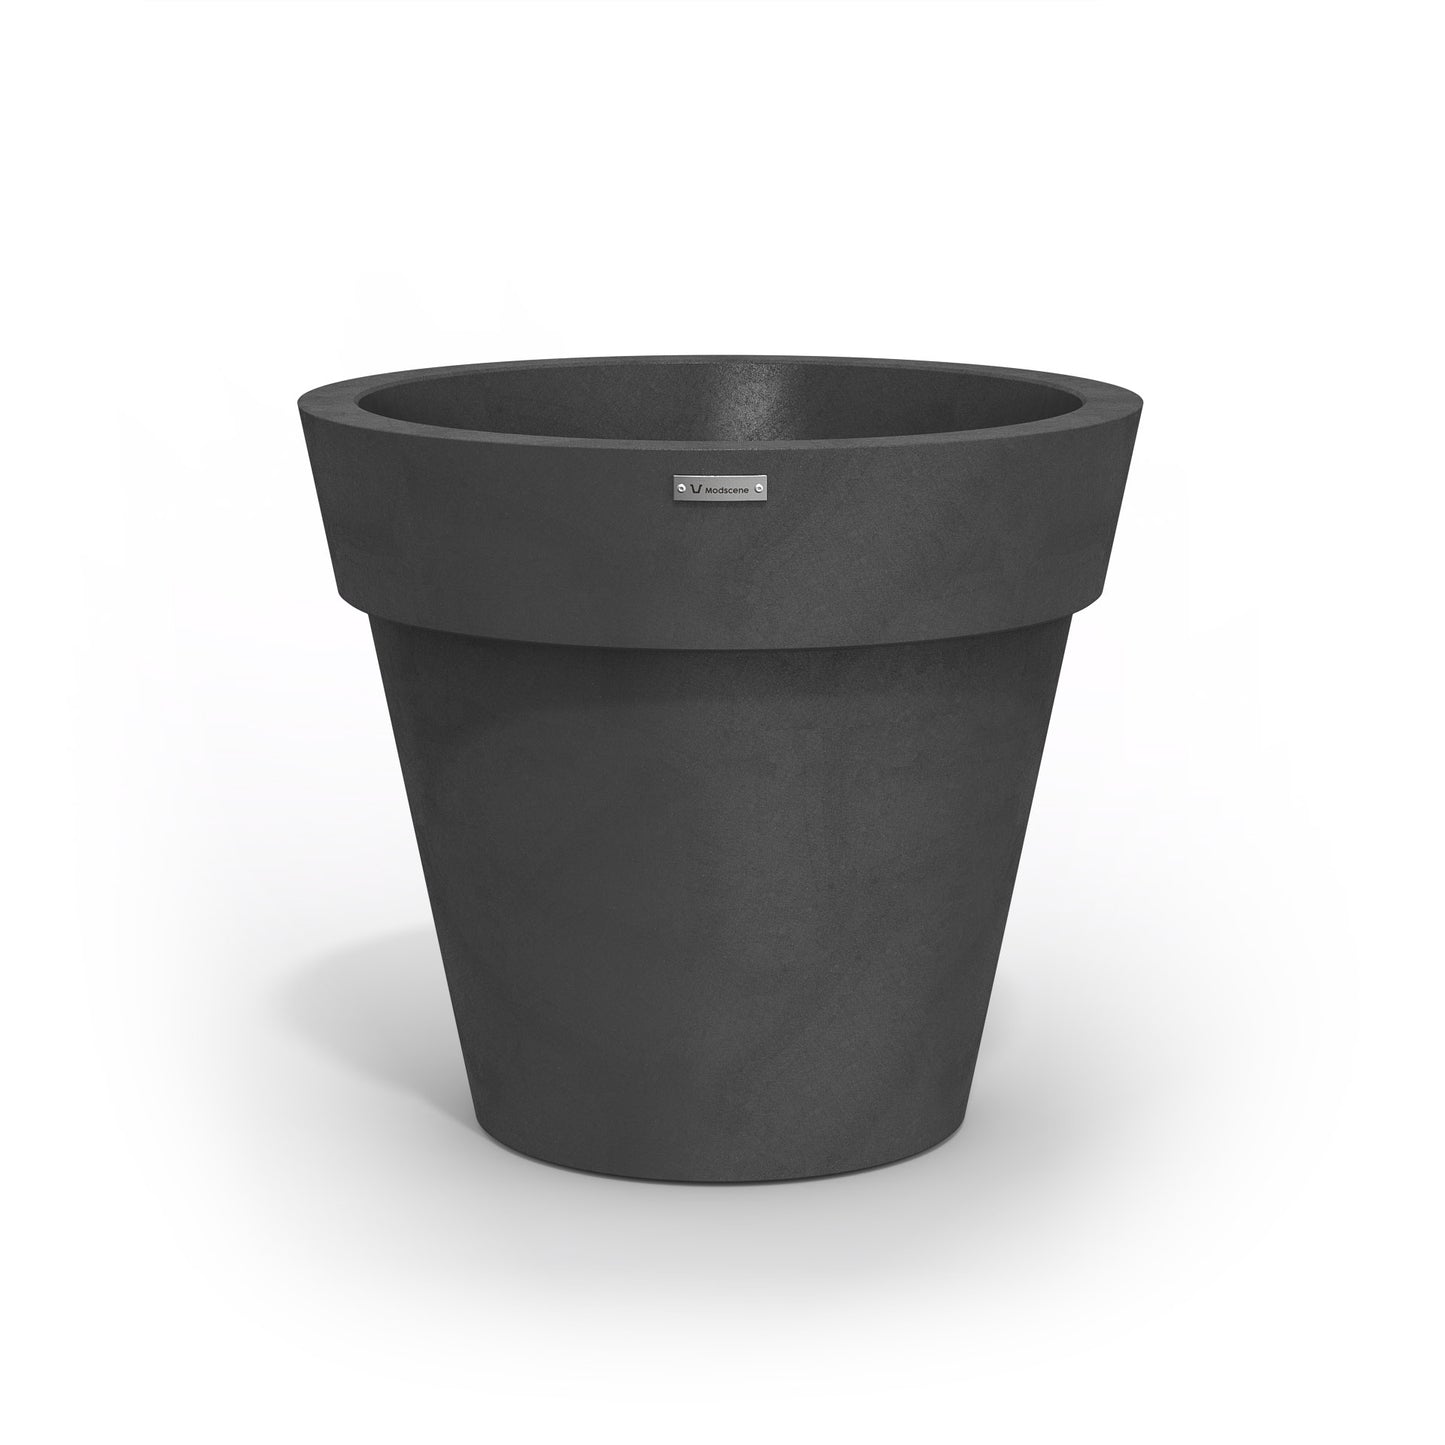 A Modscene plastic planter pot in a dark grey colour with a concrete look.